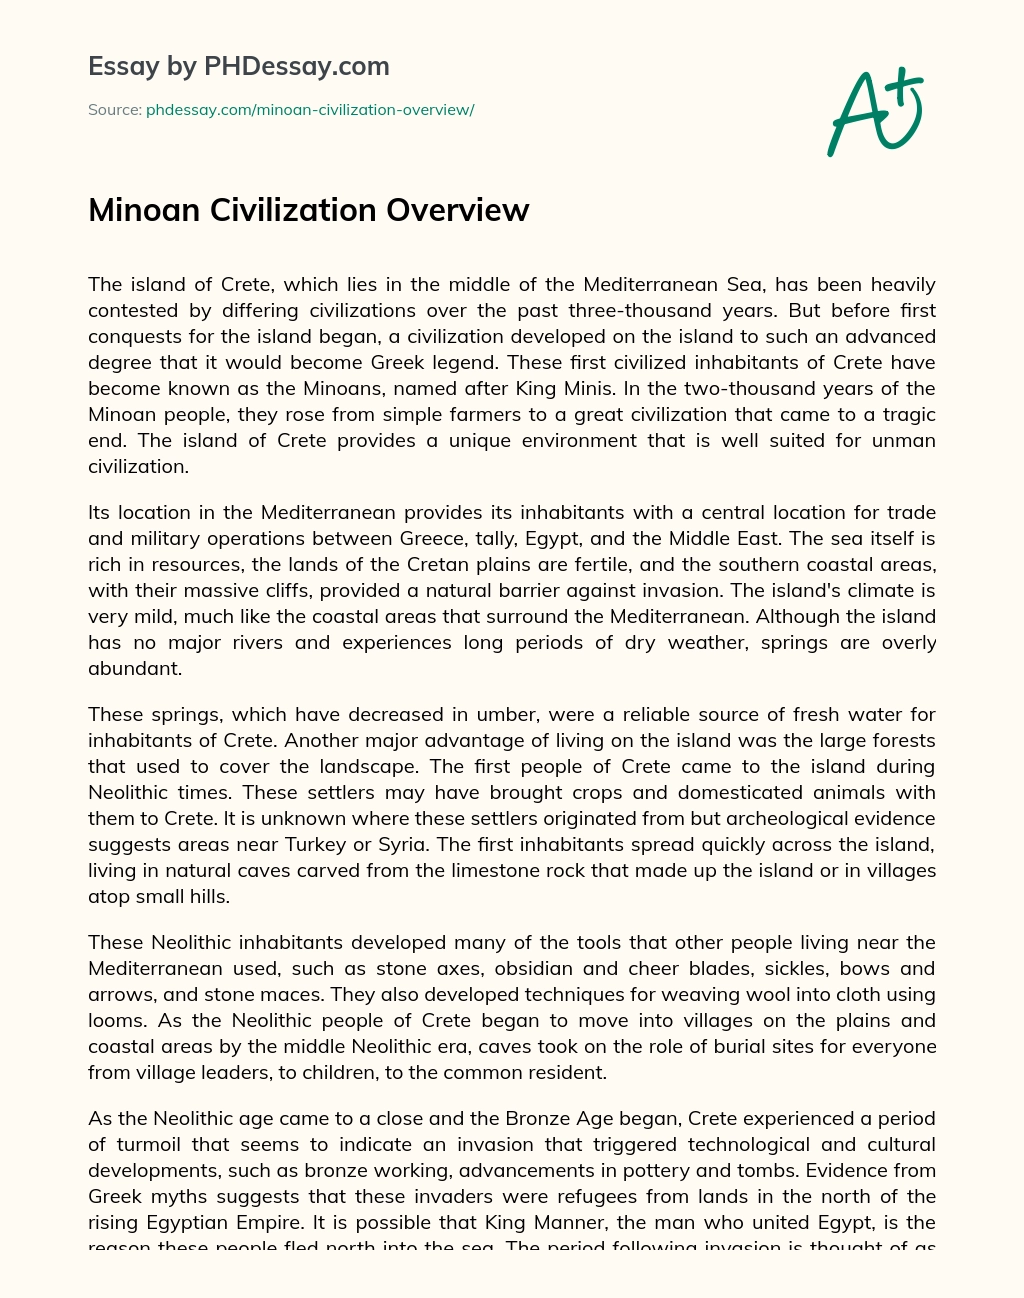 Minoan Civilization Overview essay